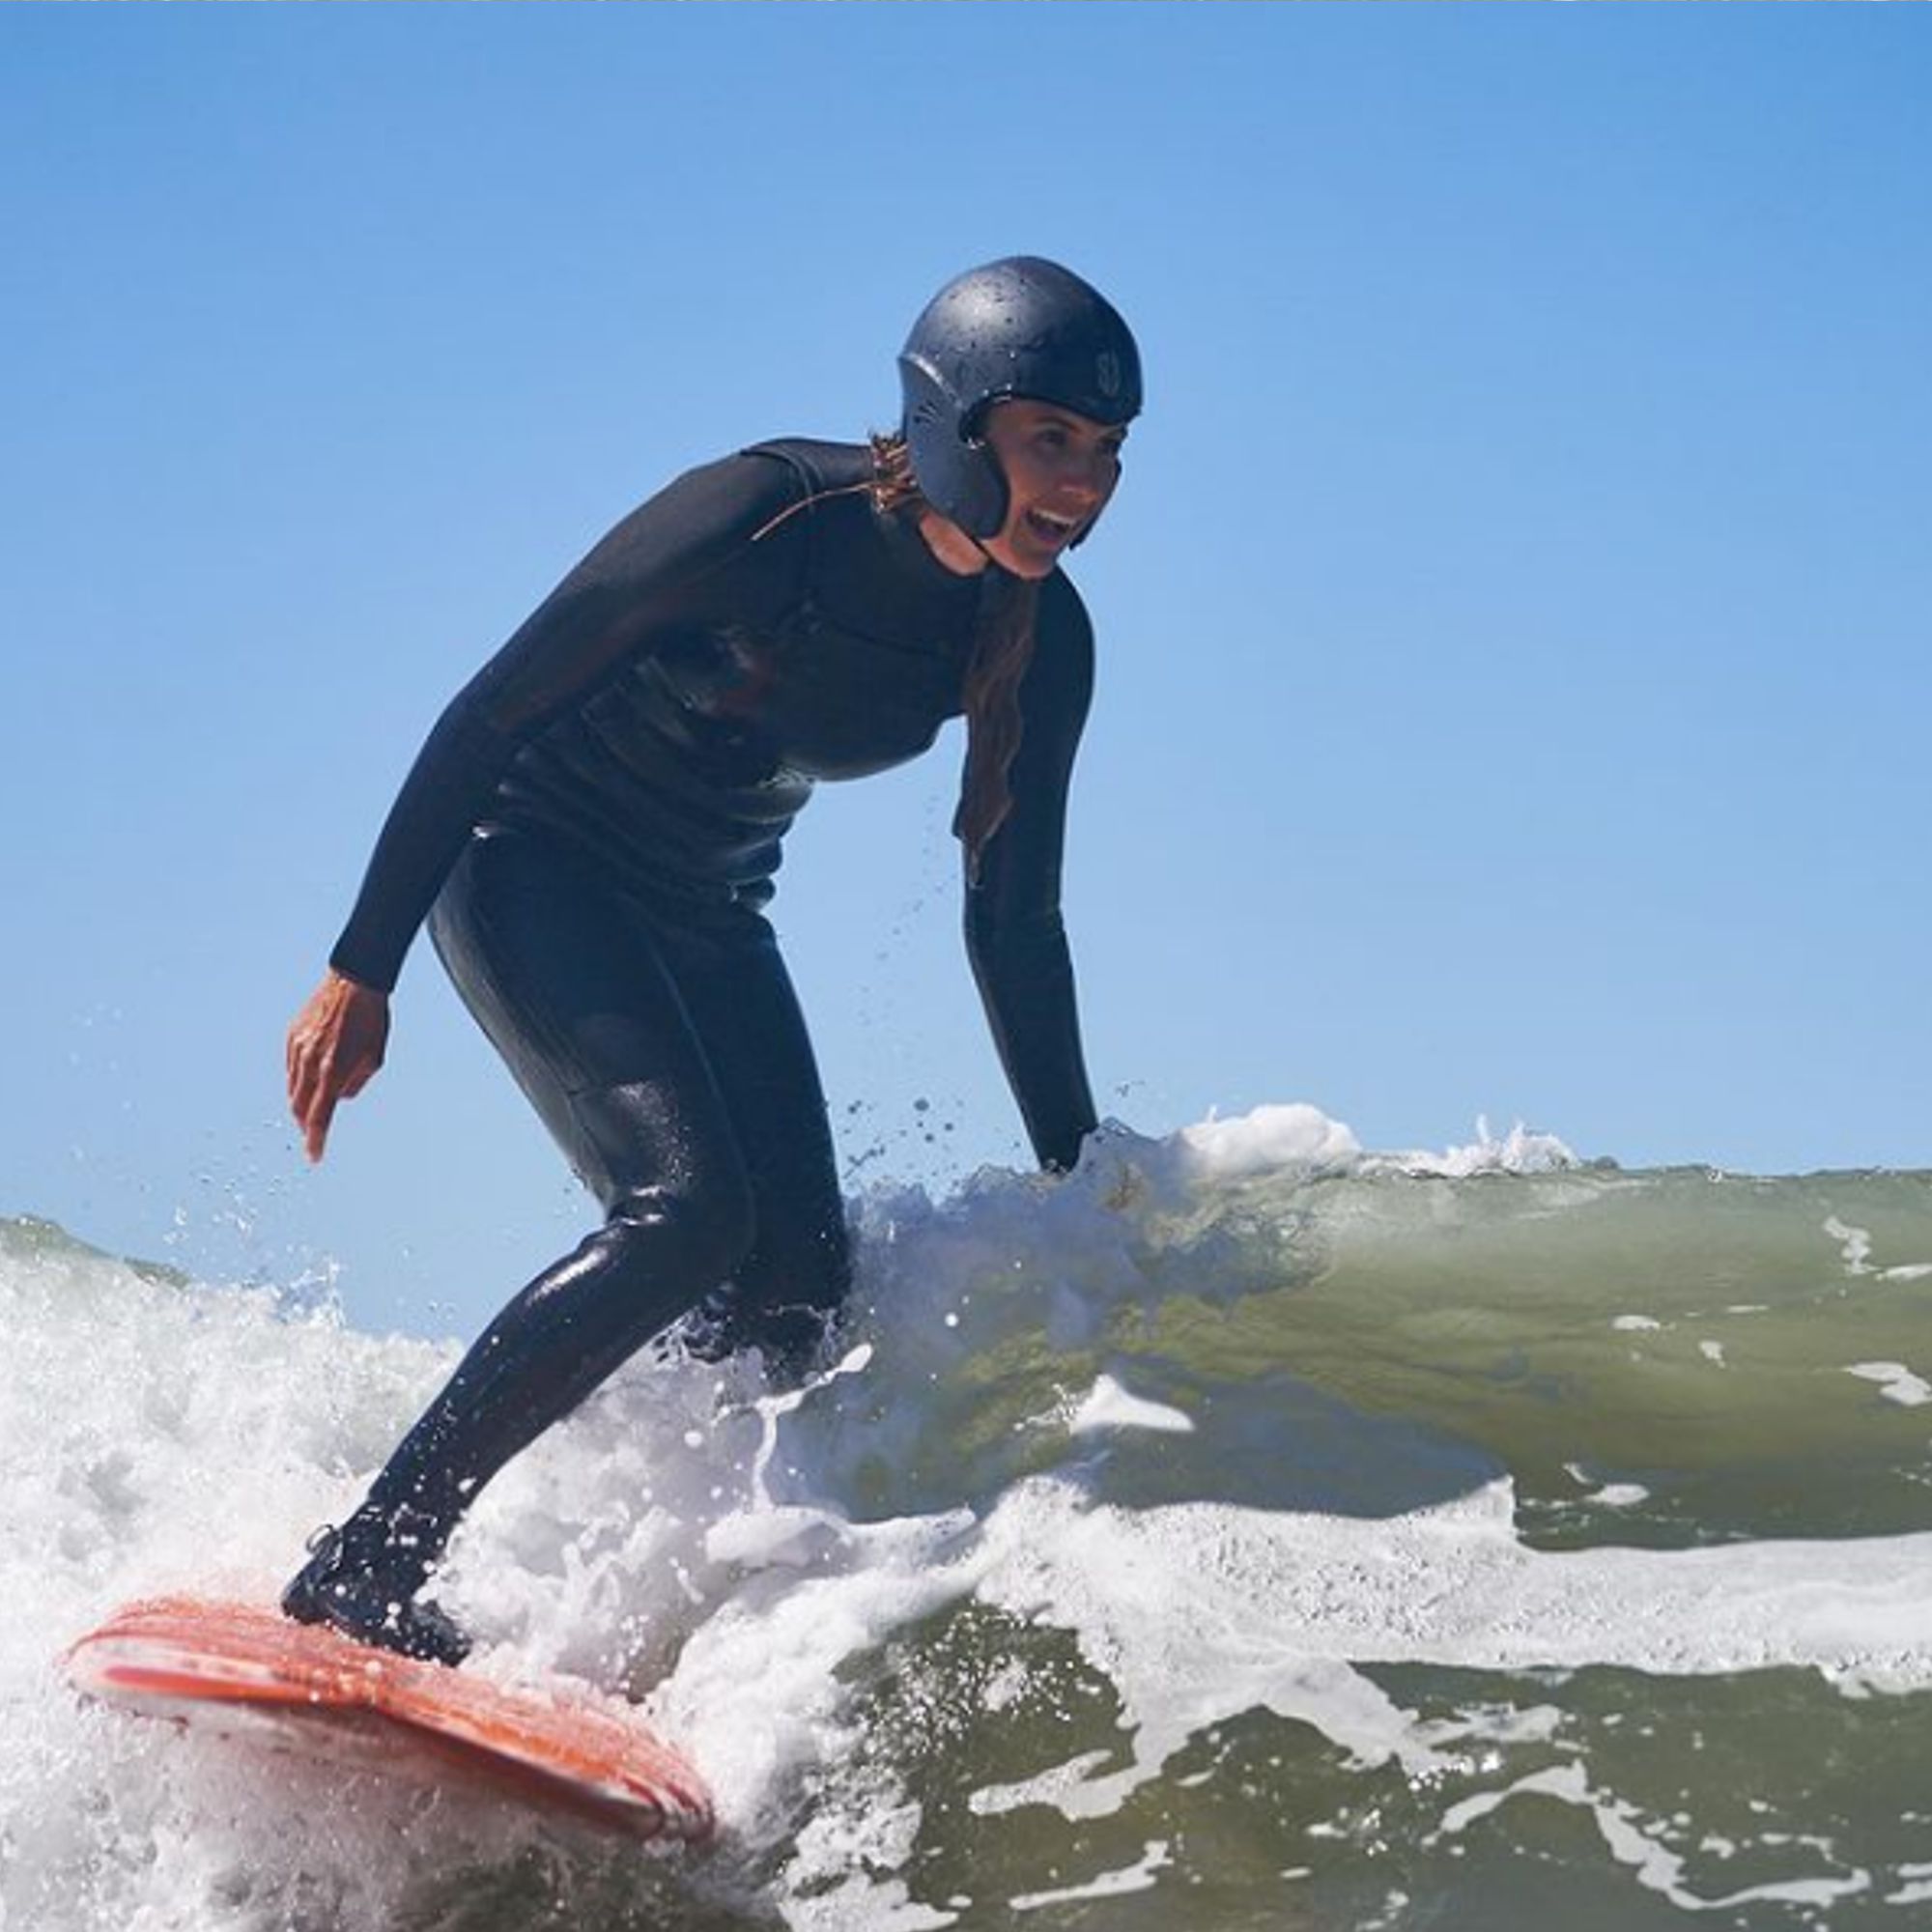 SIMBA Surf Watersports Helmet Sentinel Gr L Black • Online Shop